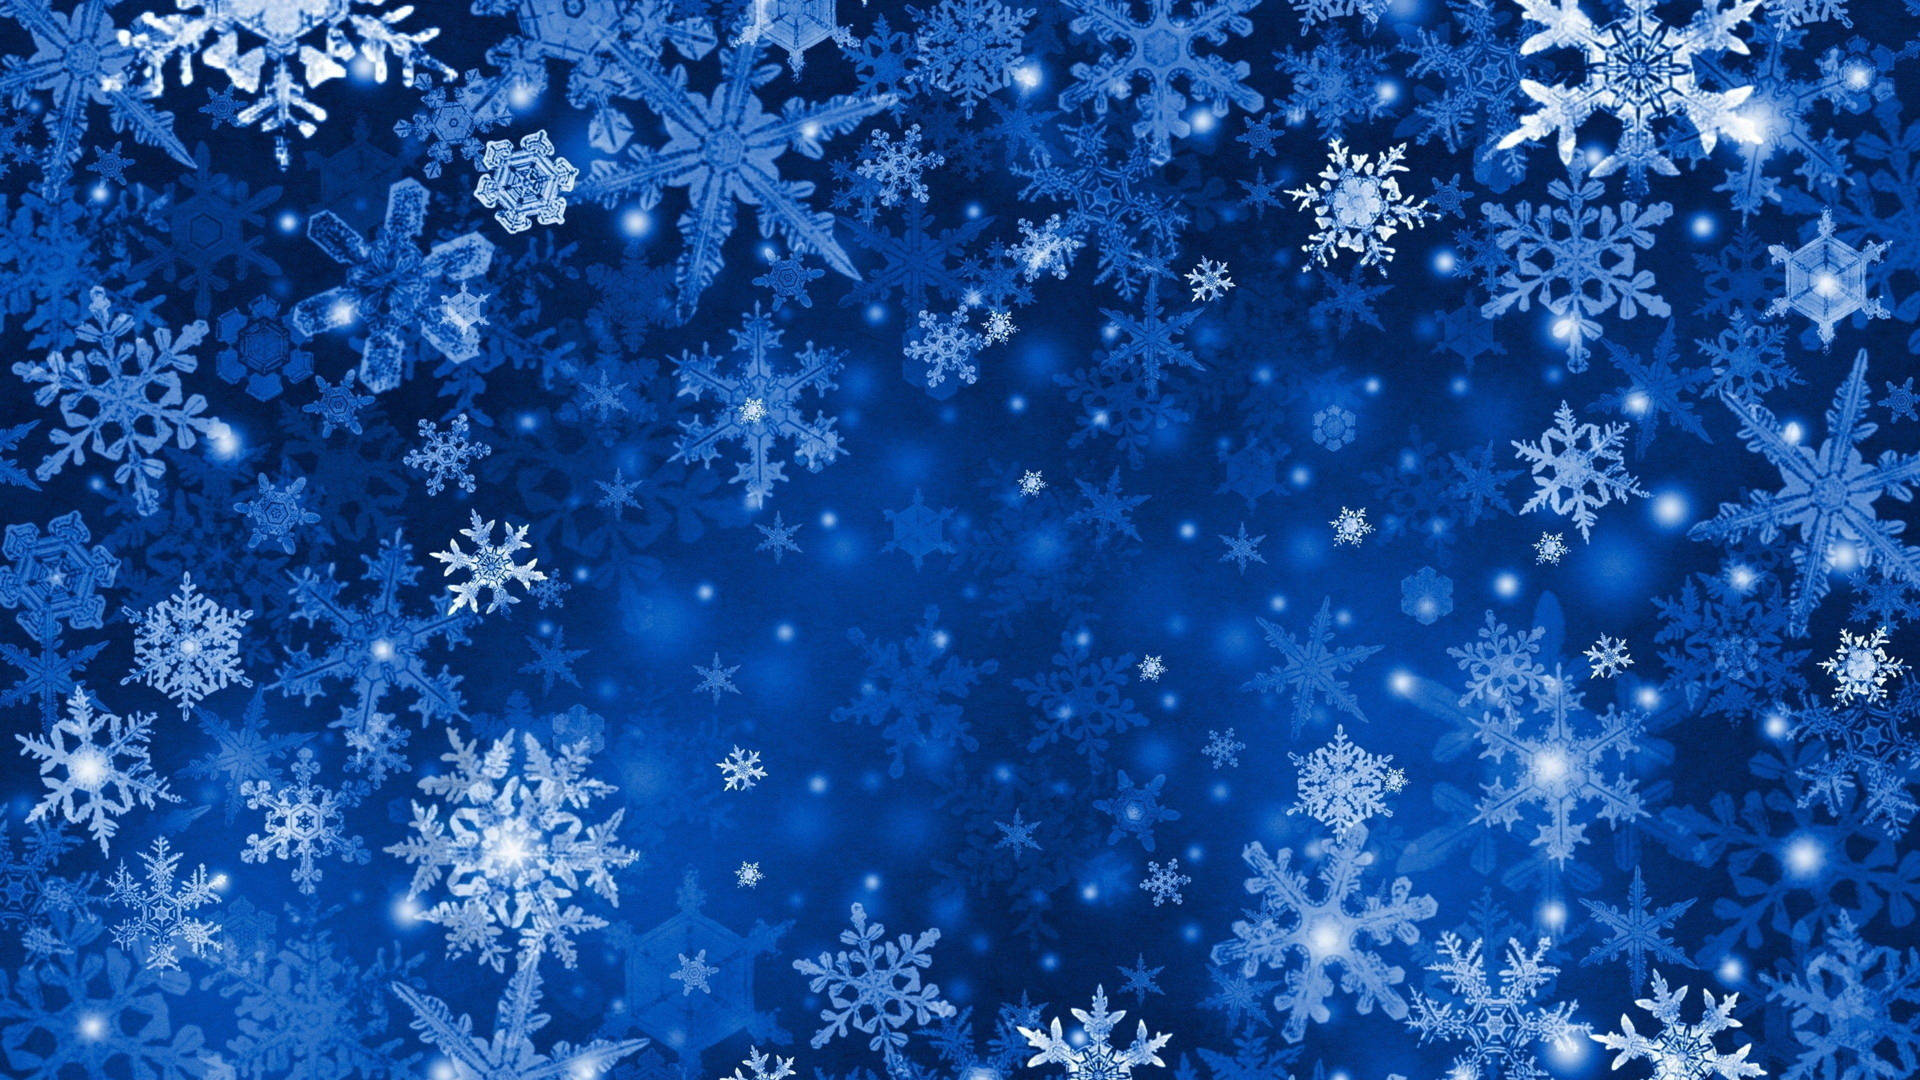 Snowflake Winter Illustration Background